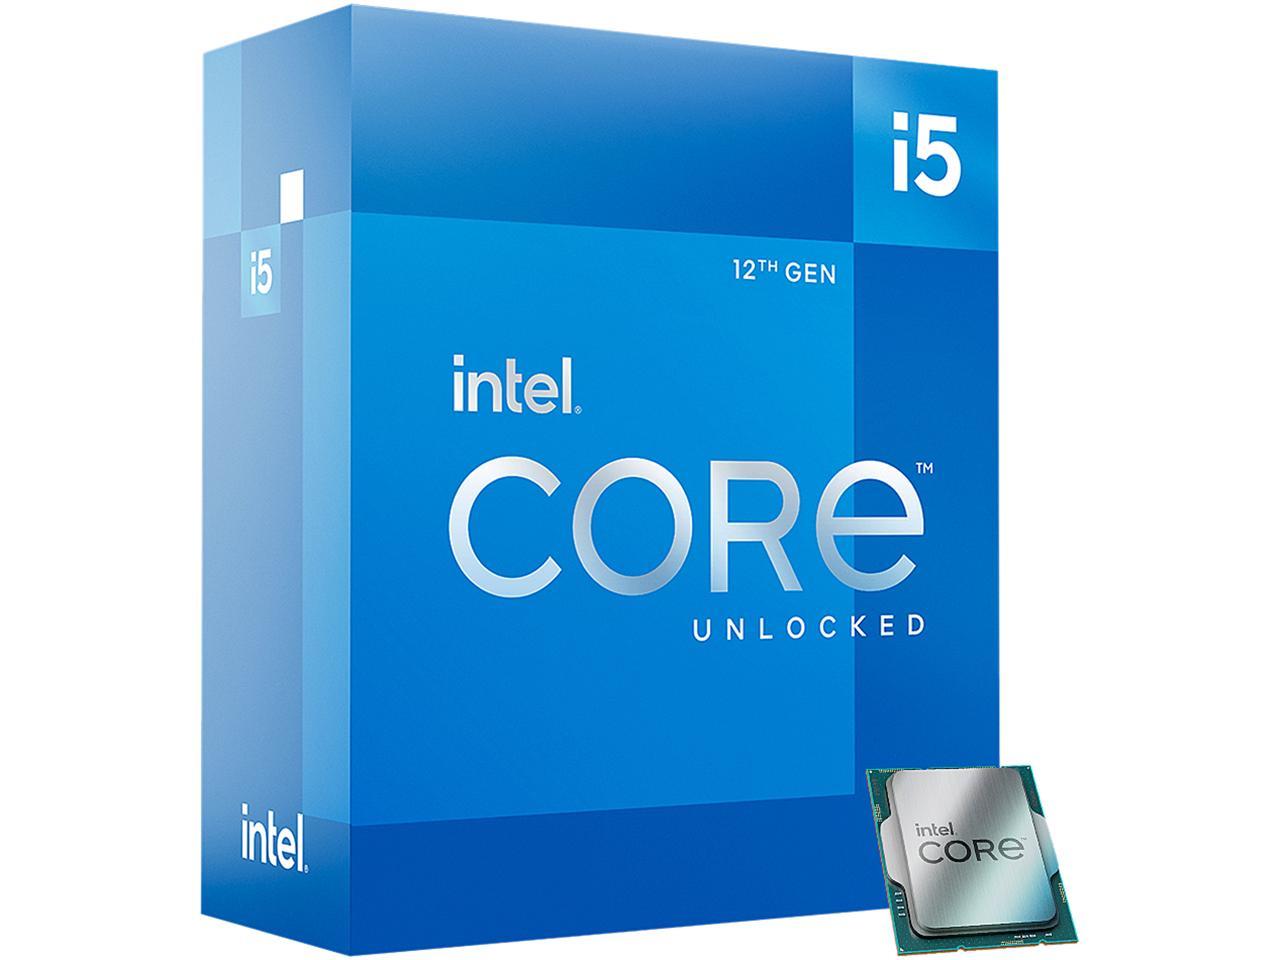 Irrigatie Grondig bloem Intel Core i5-12600K - Core i5 12th Gen Alder Lake 10-Core (6P+4E) 3.7 GHz  LGA 1700 125W Intel UHD Graphics 770 Desktop Processor - BX8071512600K -  Newegg.com